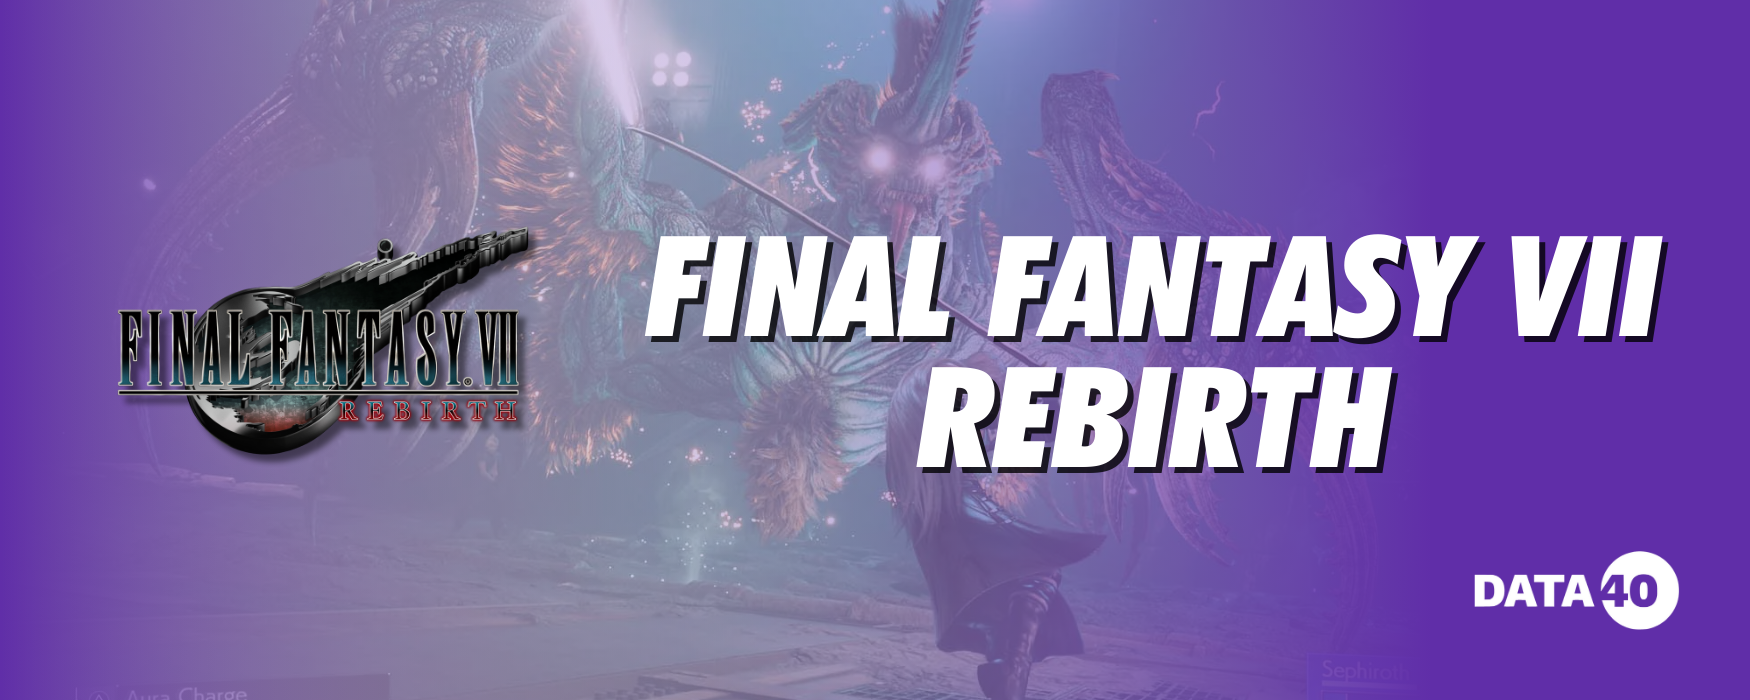 Final Fantasy VII Rebirth(1)